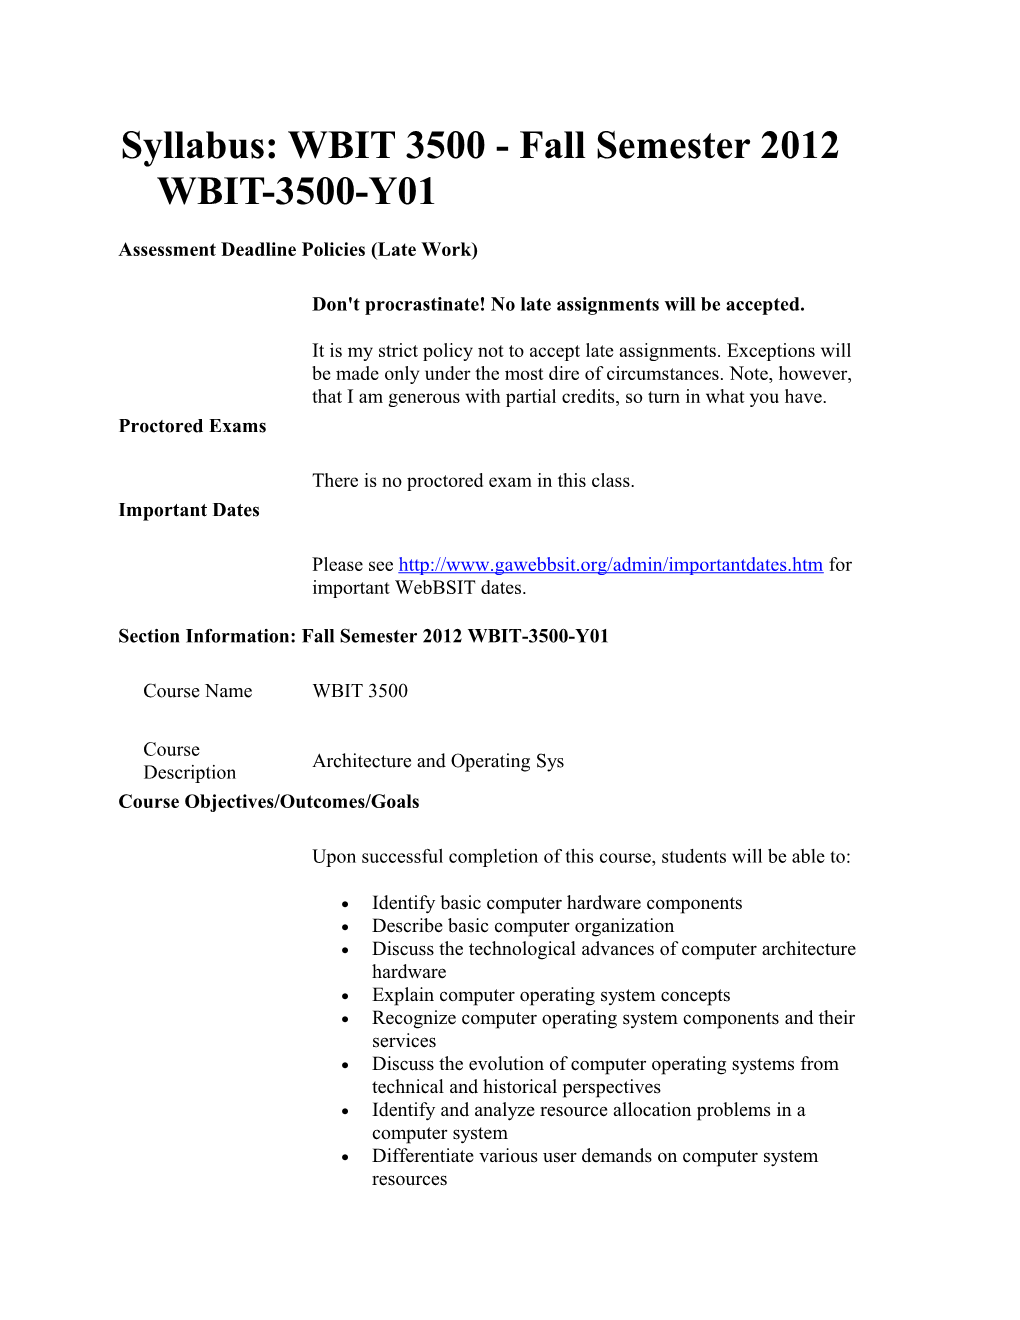 Syllabus: WBIT 3500 - Fall Semester 2012 WBIT-3500-Y01